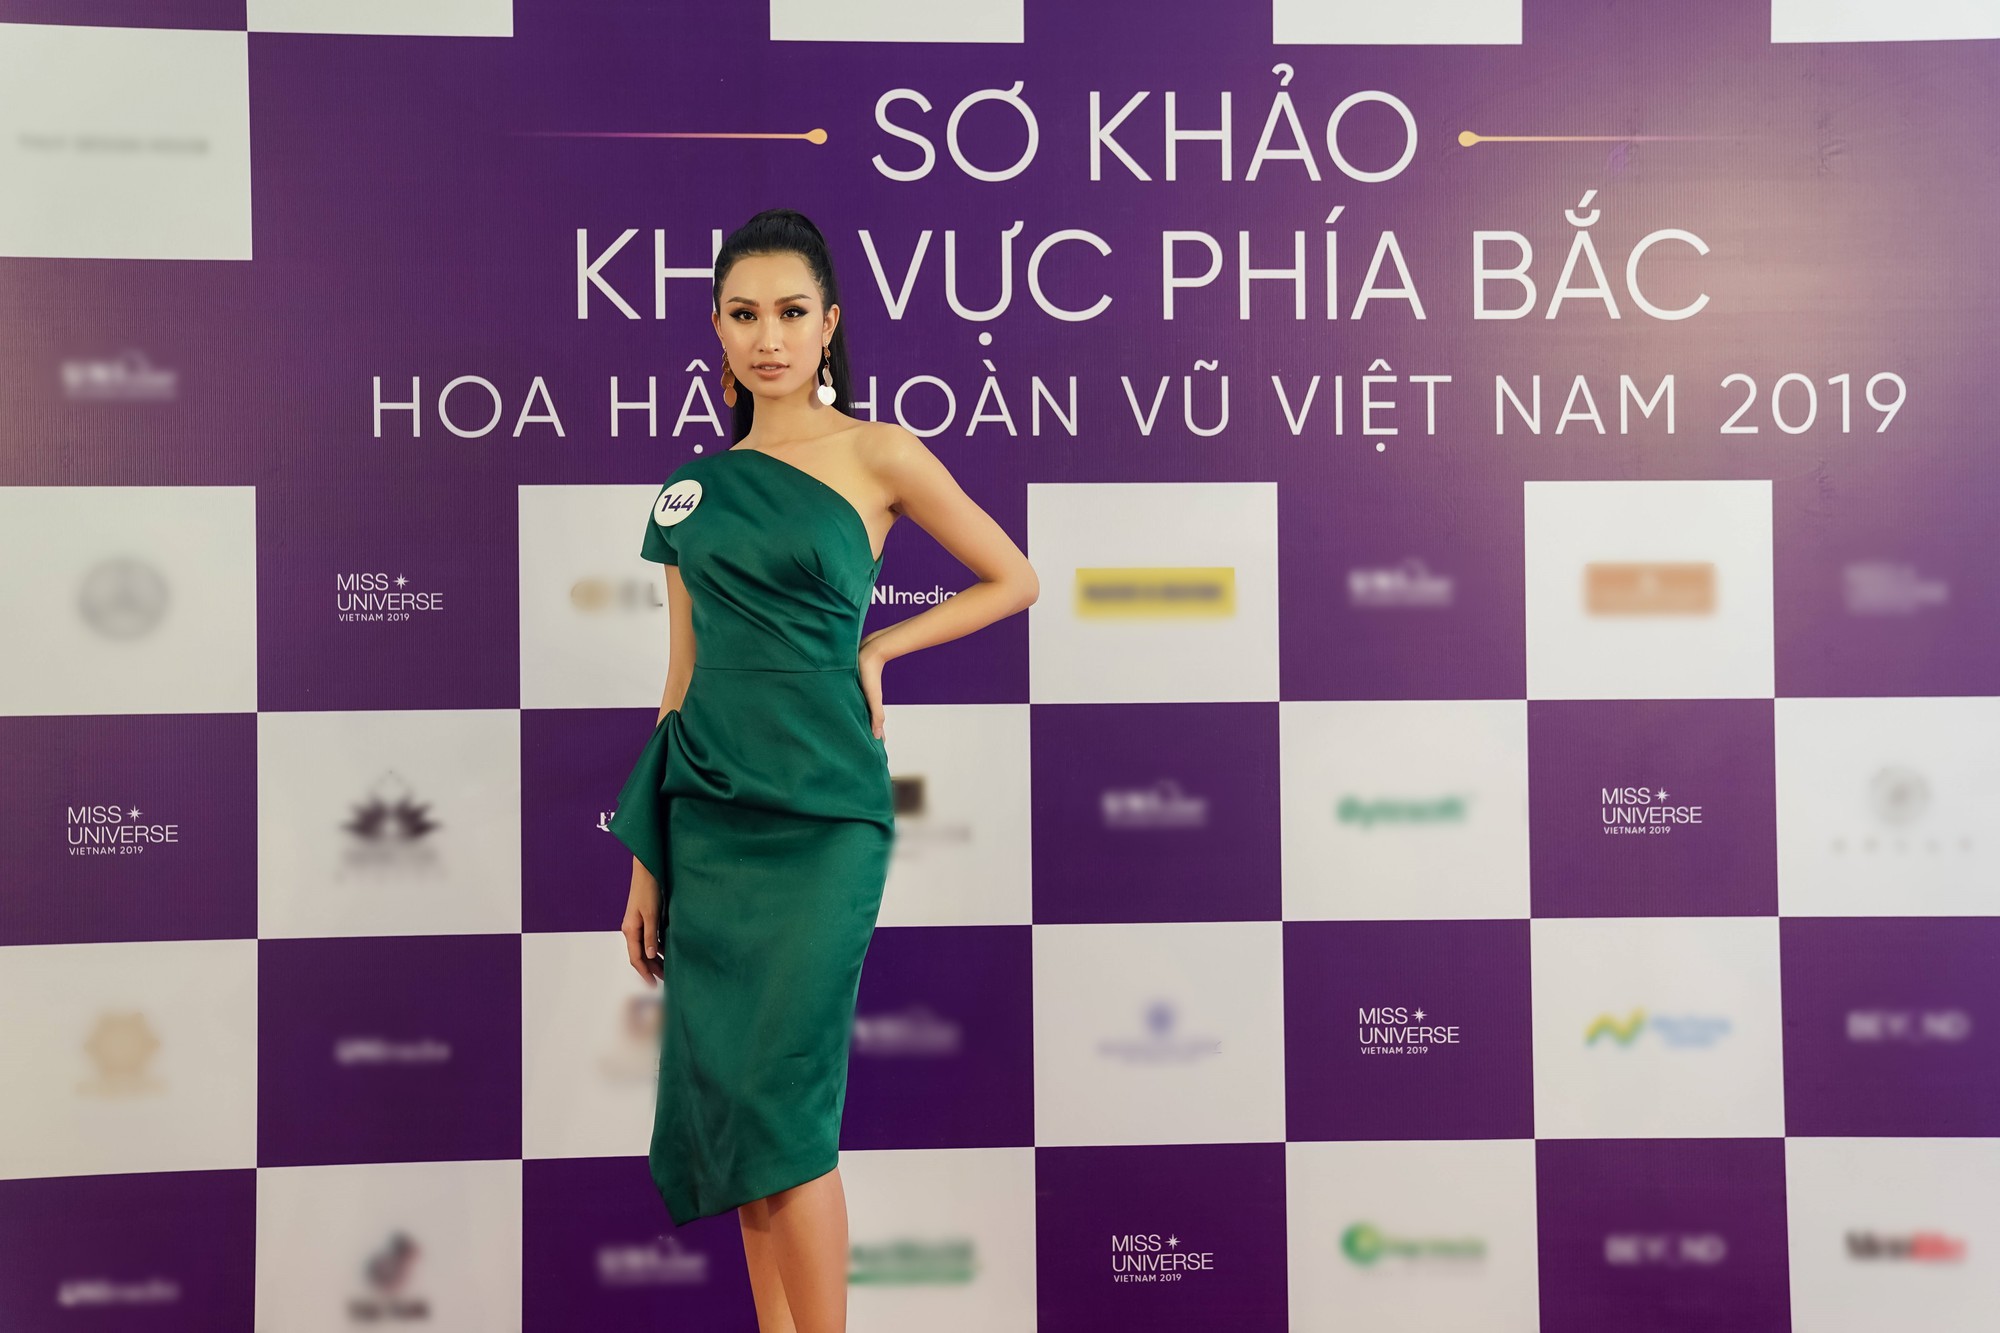 Thi sinh Hoa hau Hoan vu Viet Nam 2019 chup hinh o Backdrop (5)